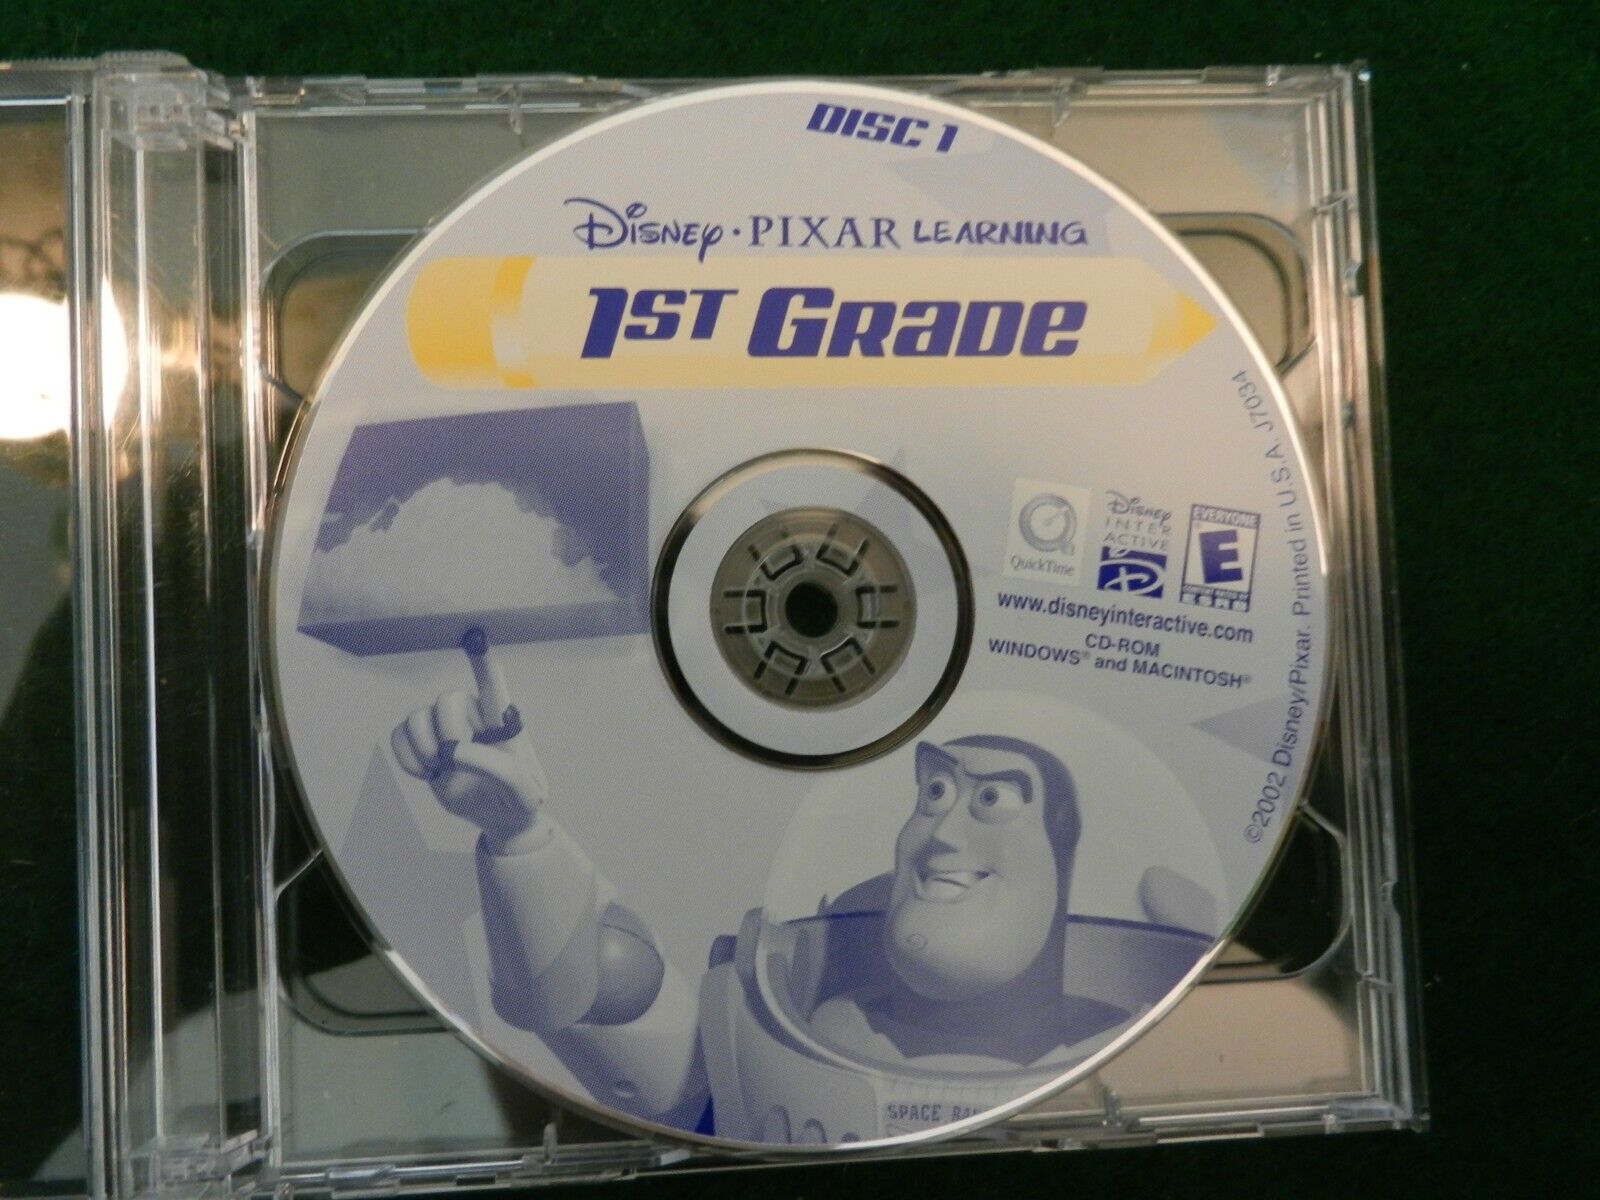 Disney-Pixar Learning *1st GRADE* (2002, used learning PC ).